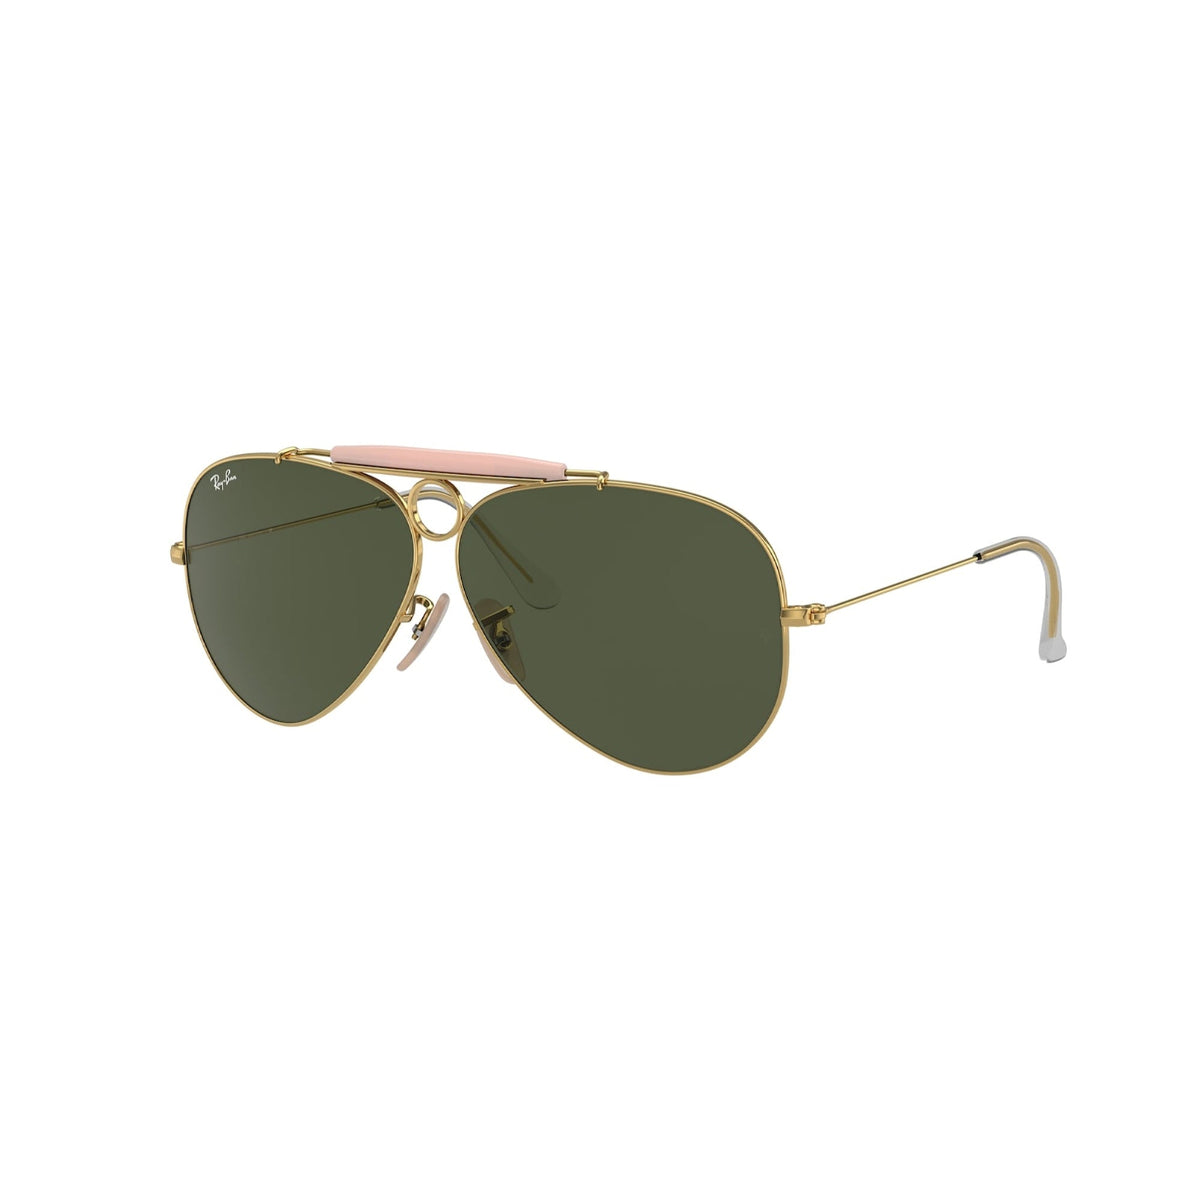 Ray-Ban Unisex Sunglasses Shooter Gold G-15 Green Metal Metal  0RB3138 001 58